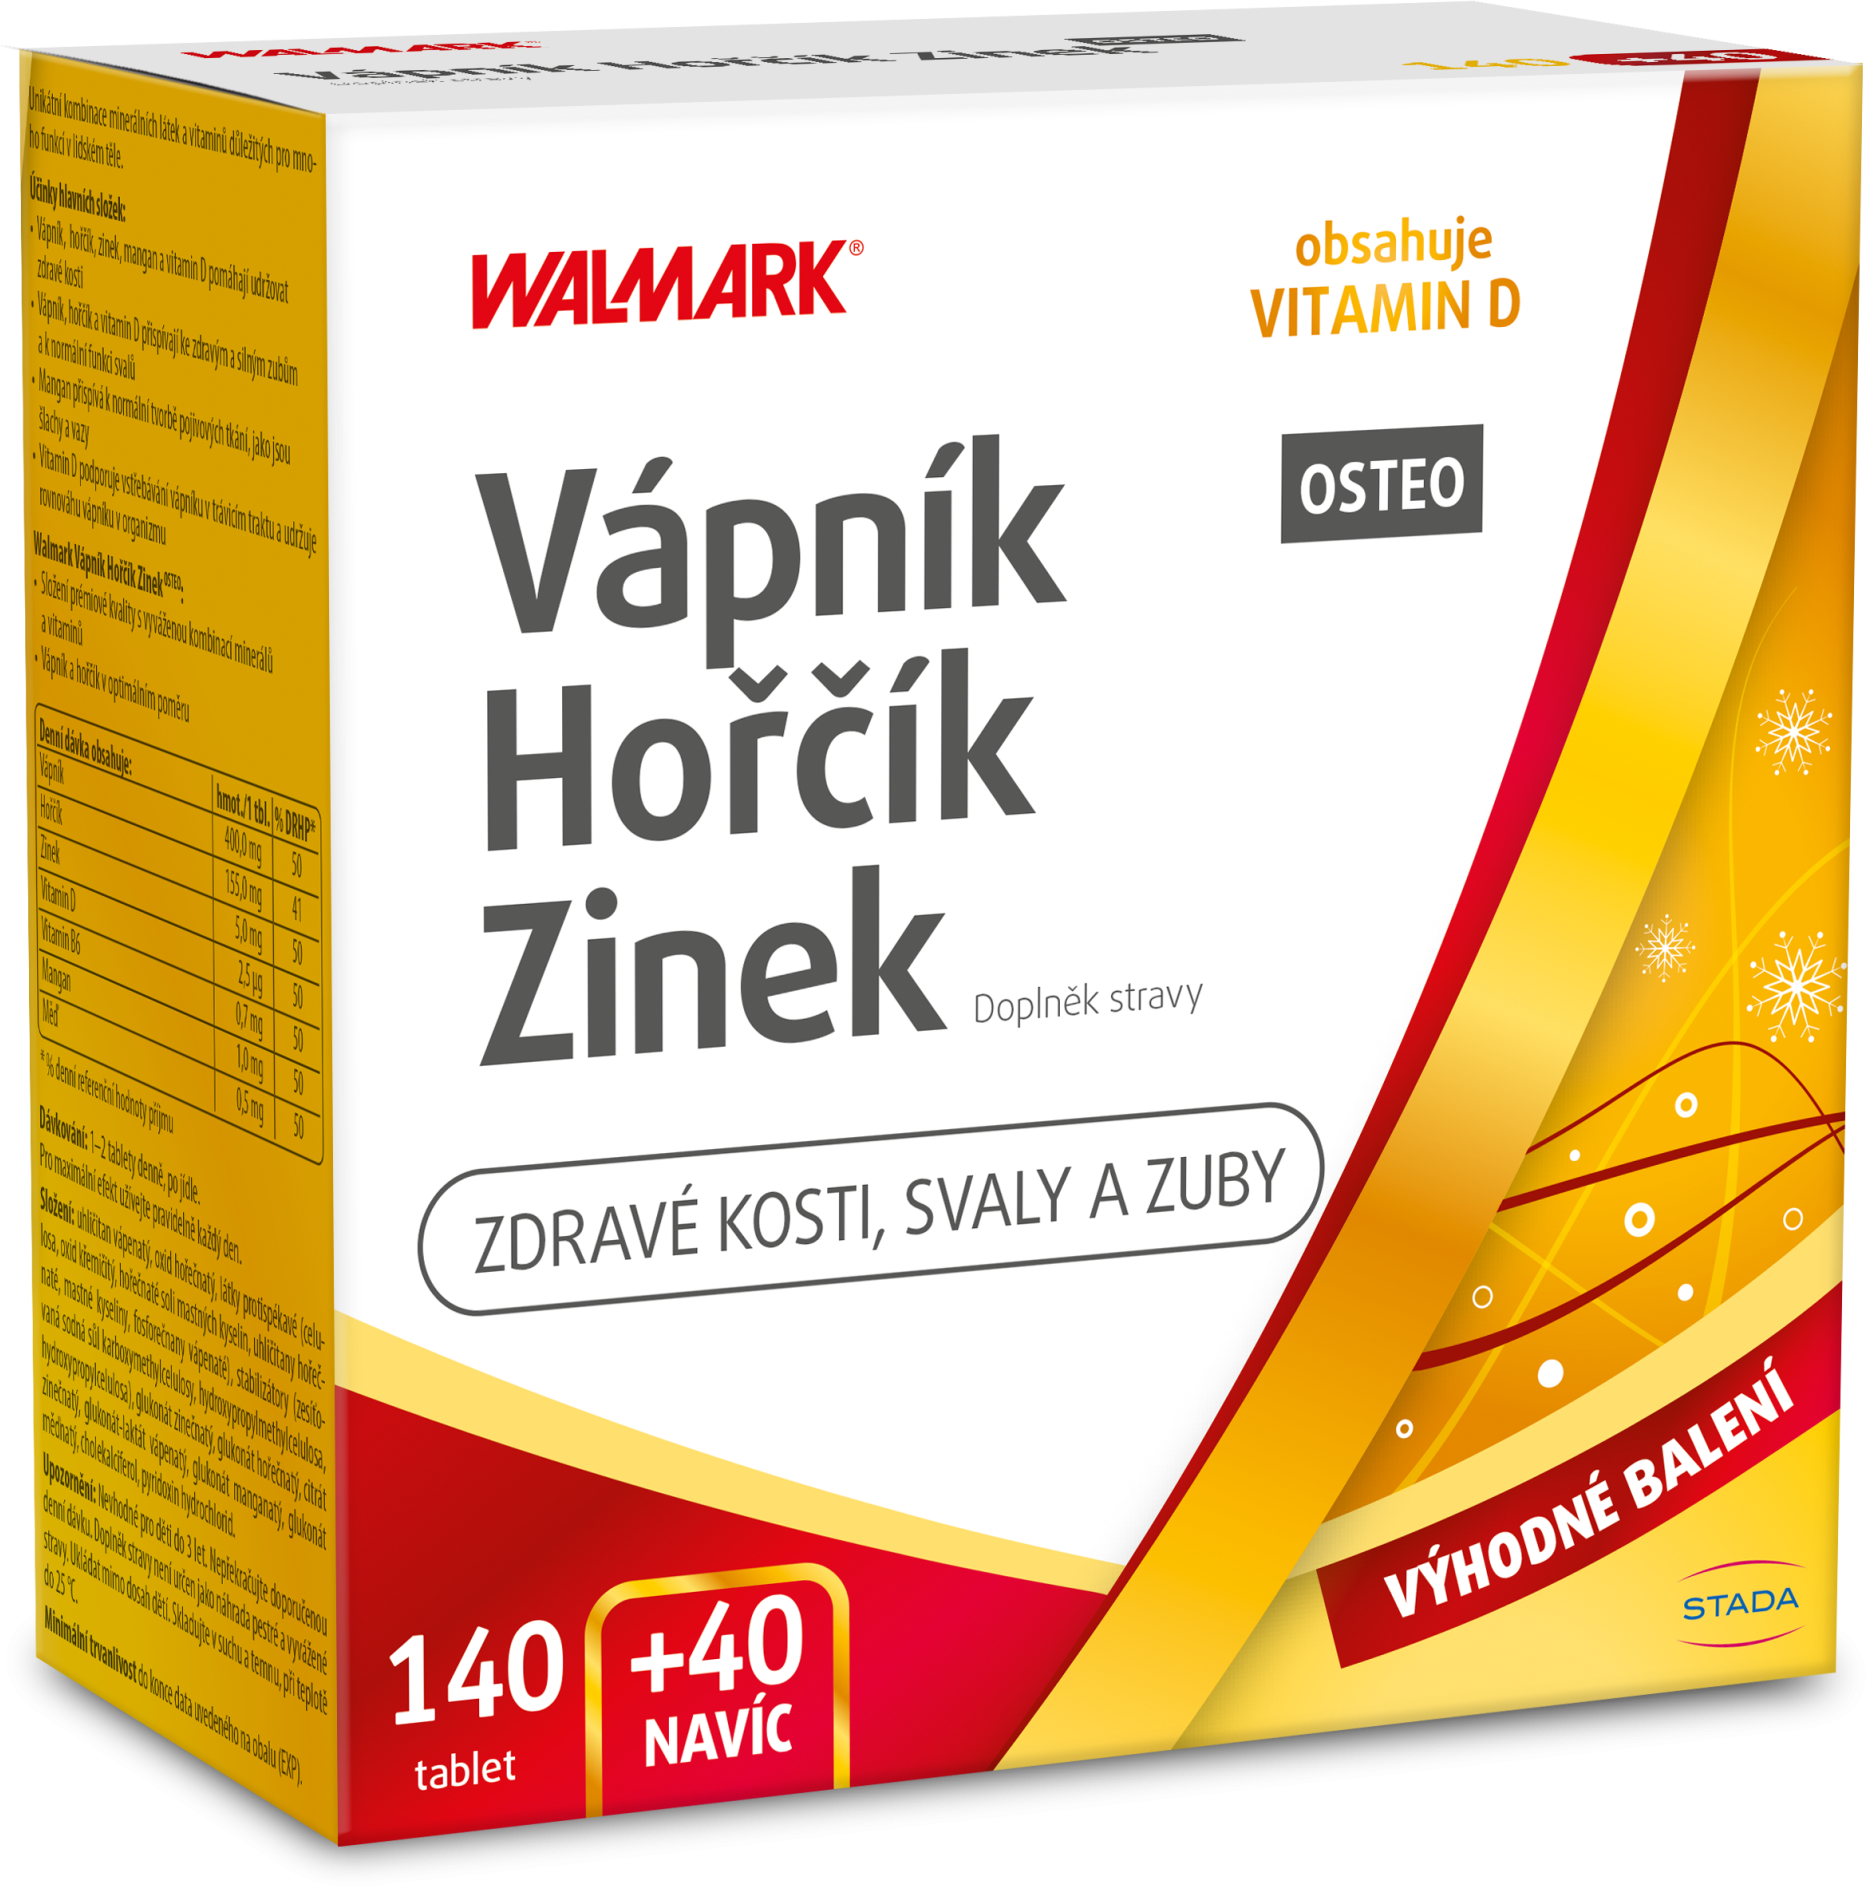 Walmark Vápník, Hořčík, Zinek Osteo 180 tablet